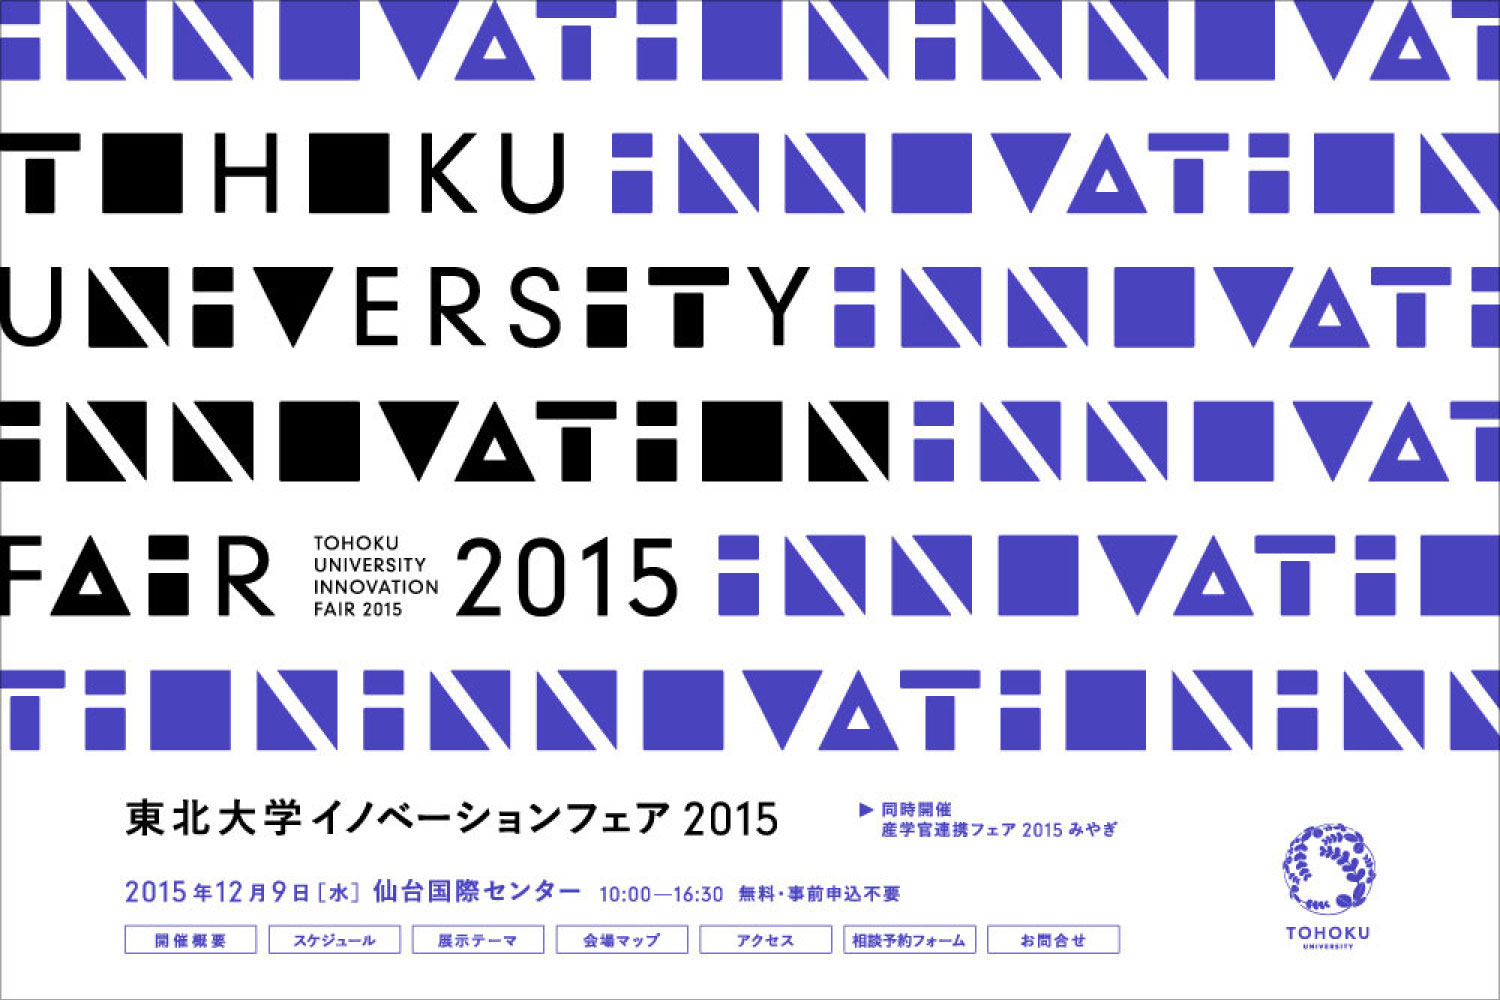 Tohoku Univ. Innovation Fair